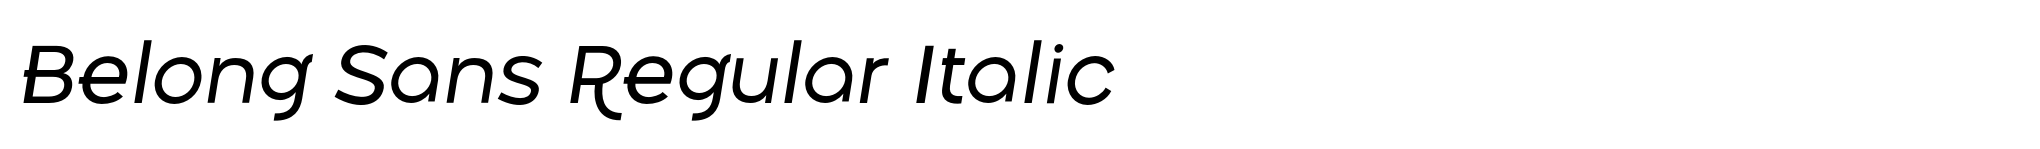 Belong Sans Regular Italic image